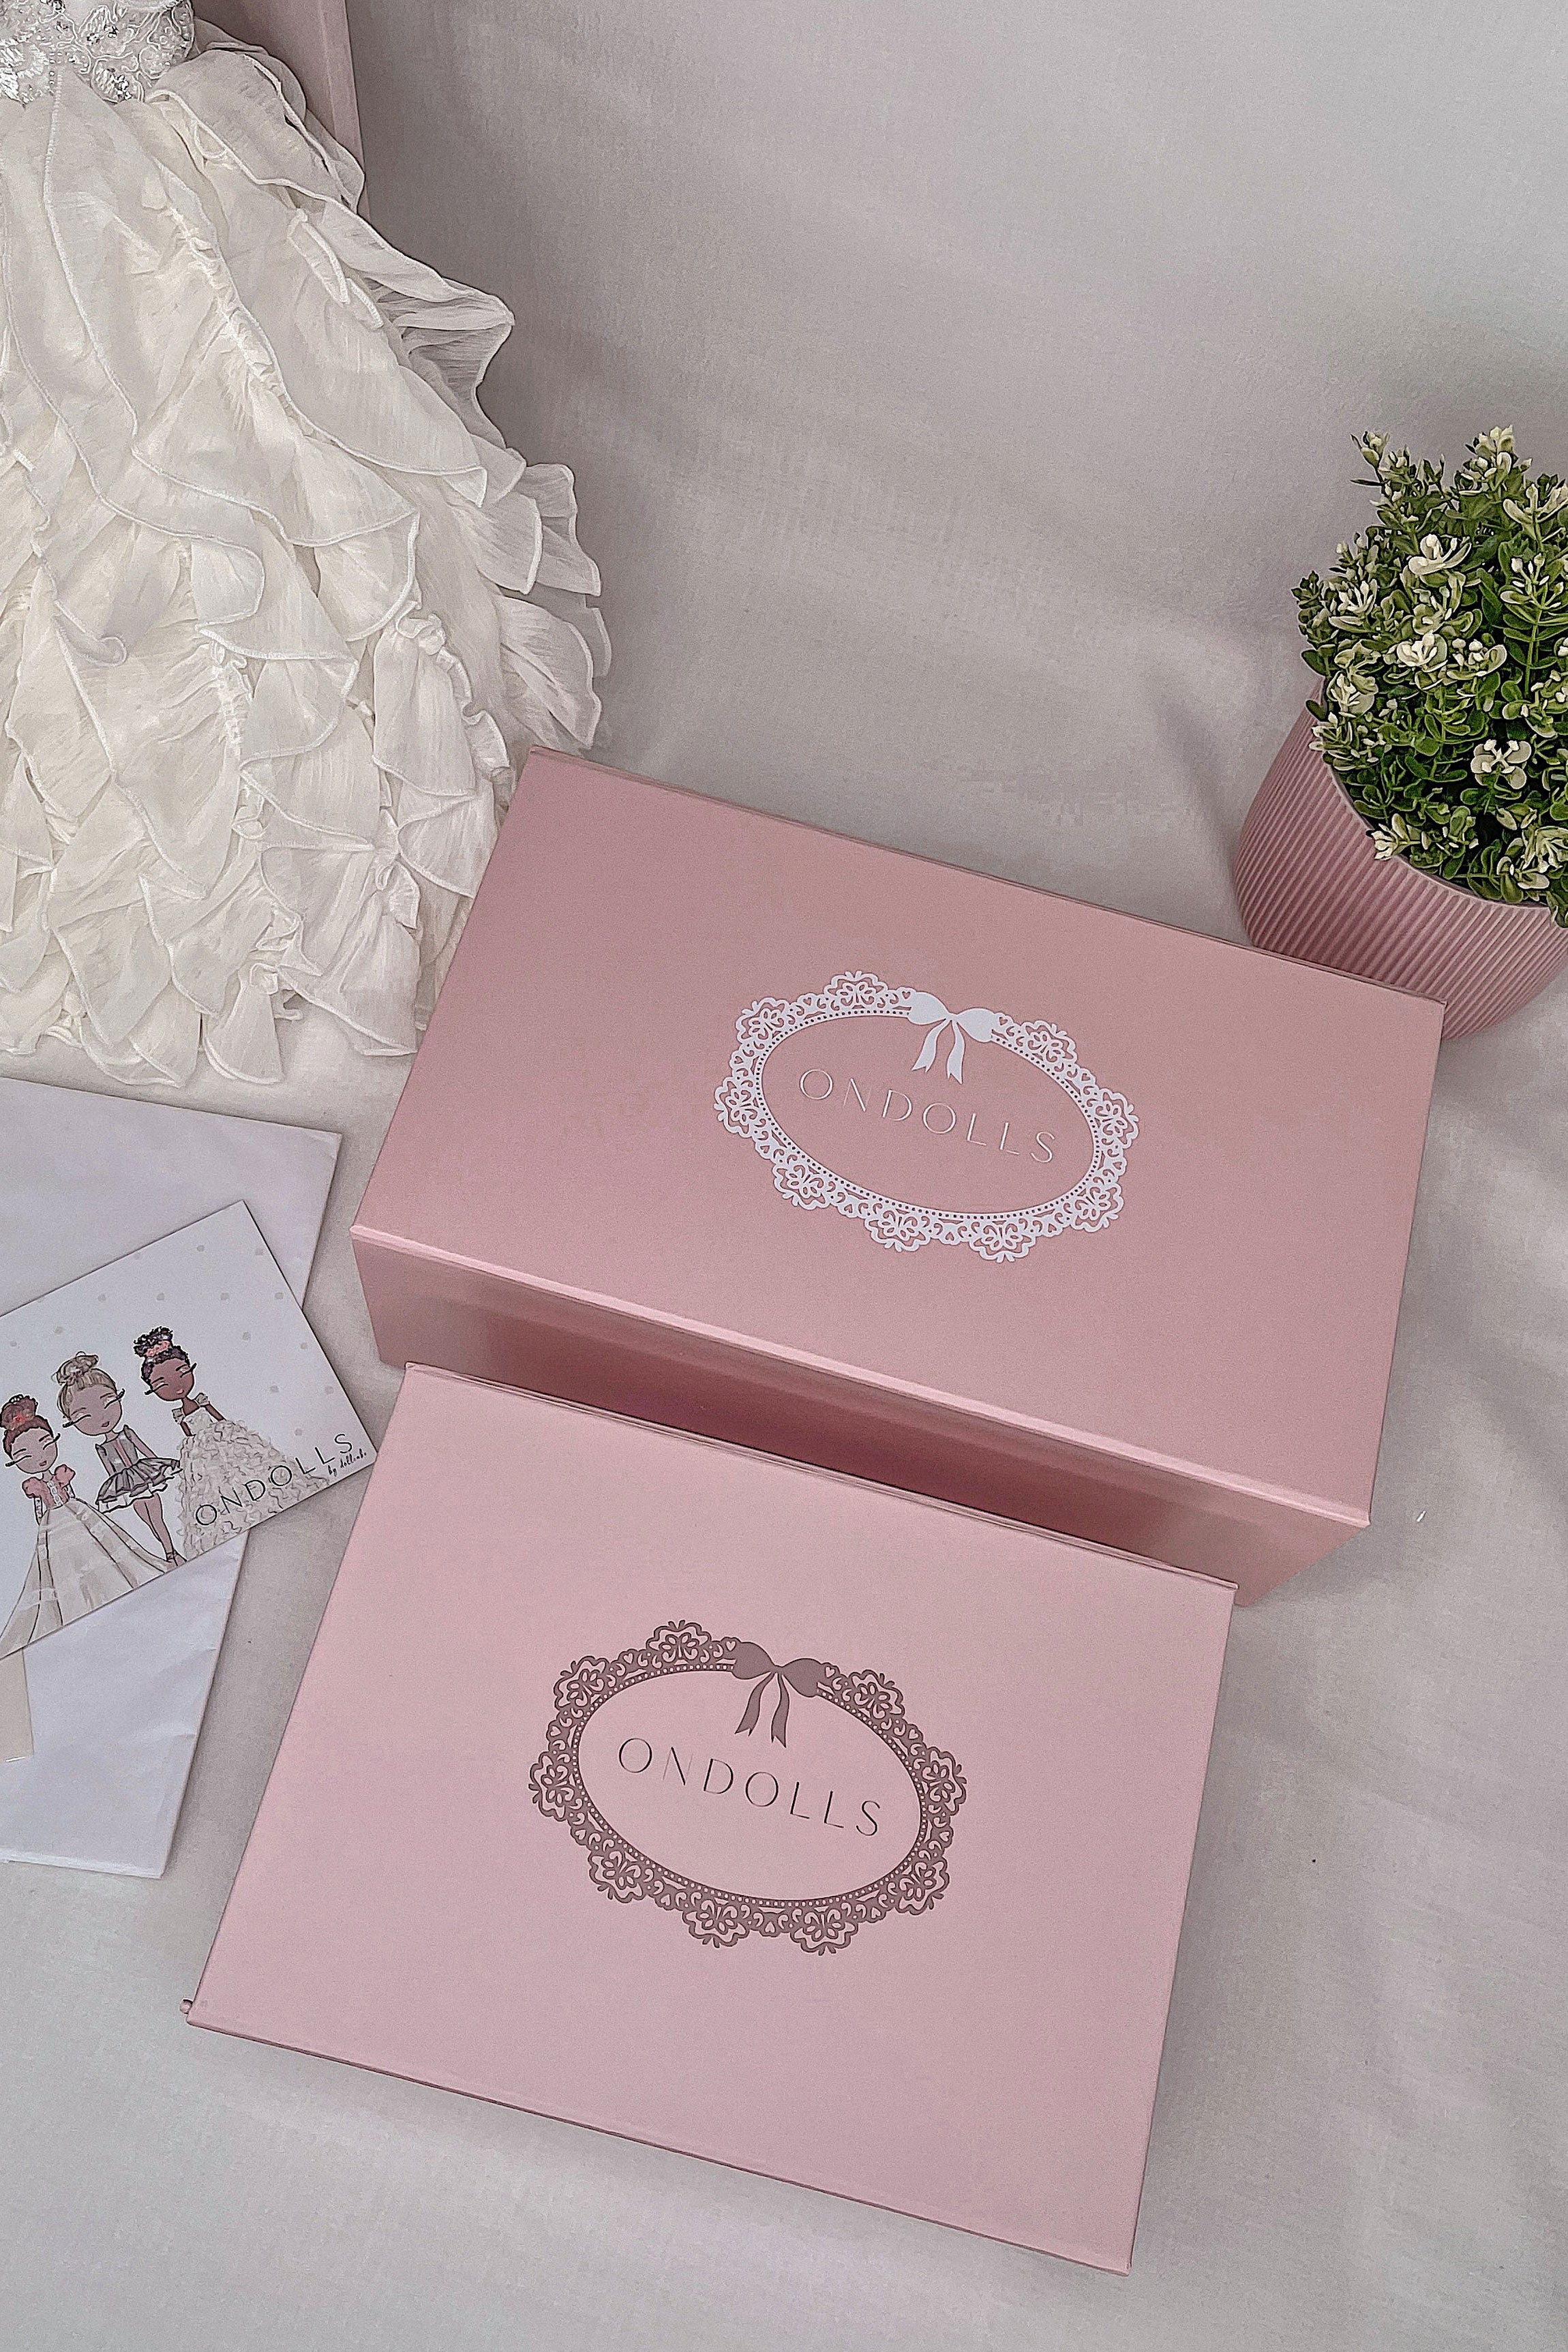 Ondolls Gift Box